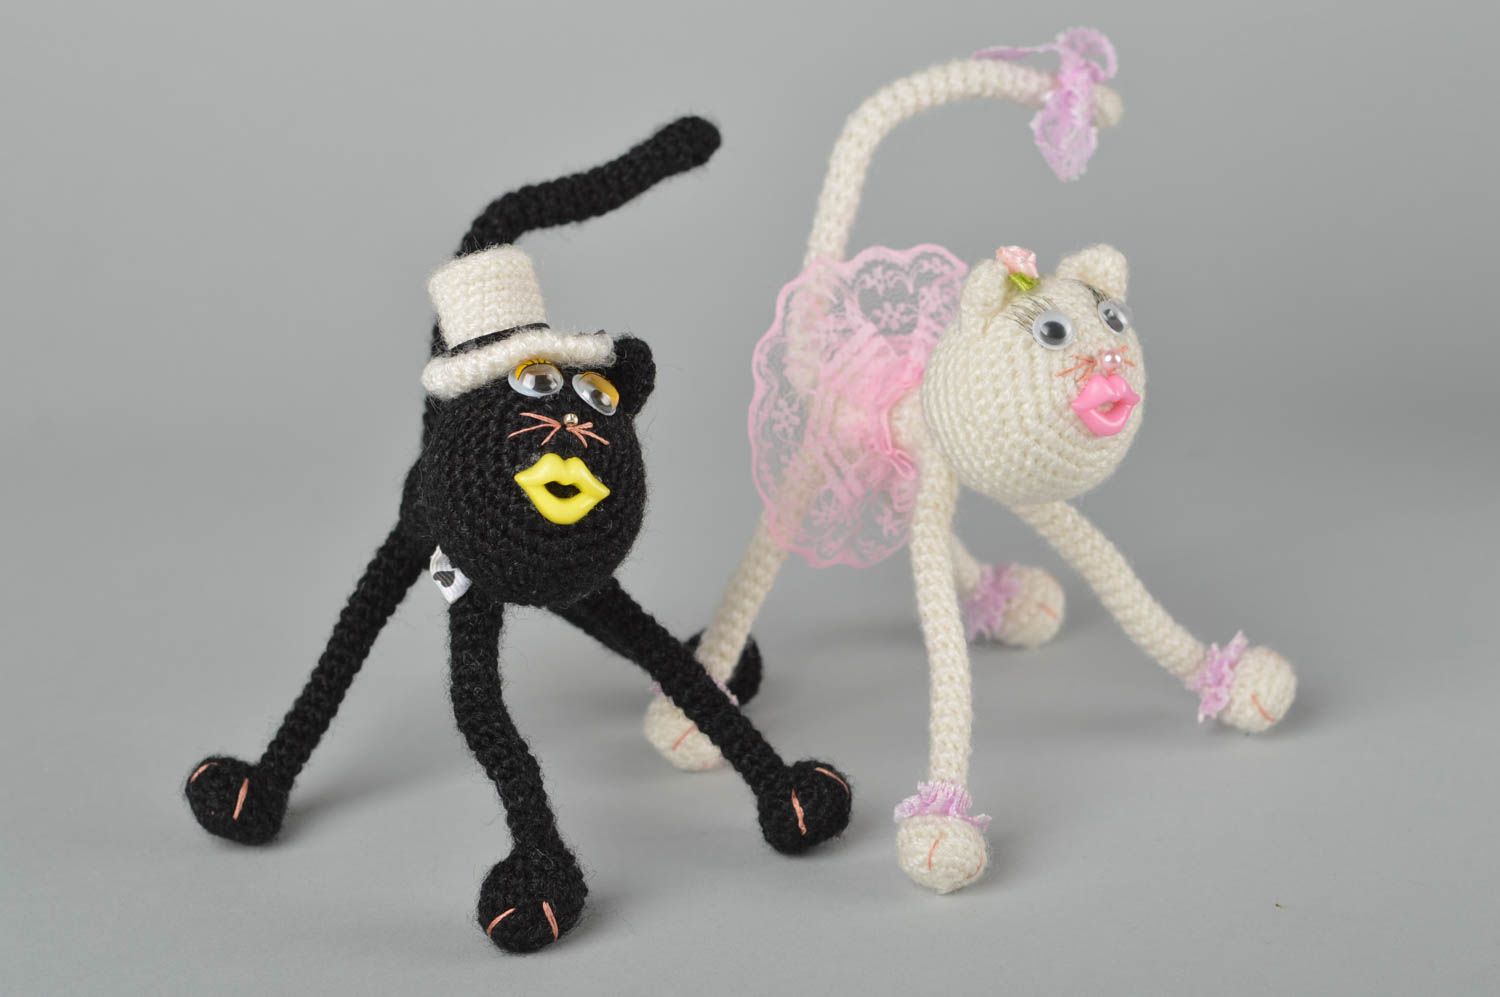 Handmade crocheted toys creative toys for children trendy toys nursery decor photo 3